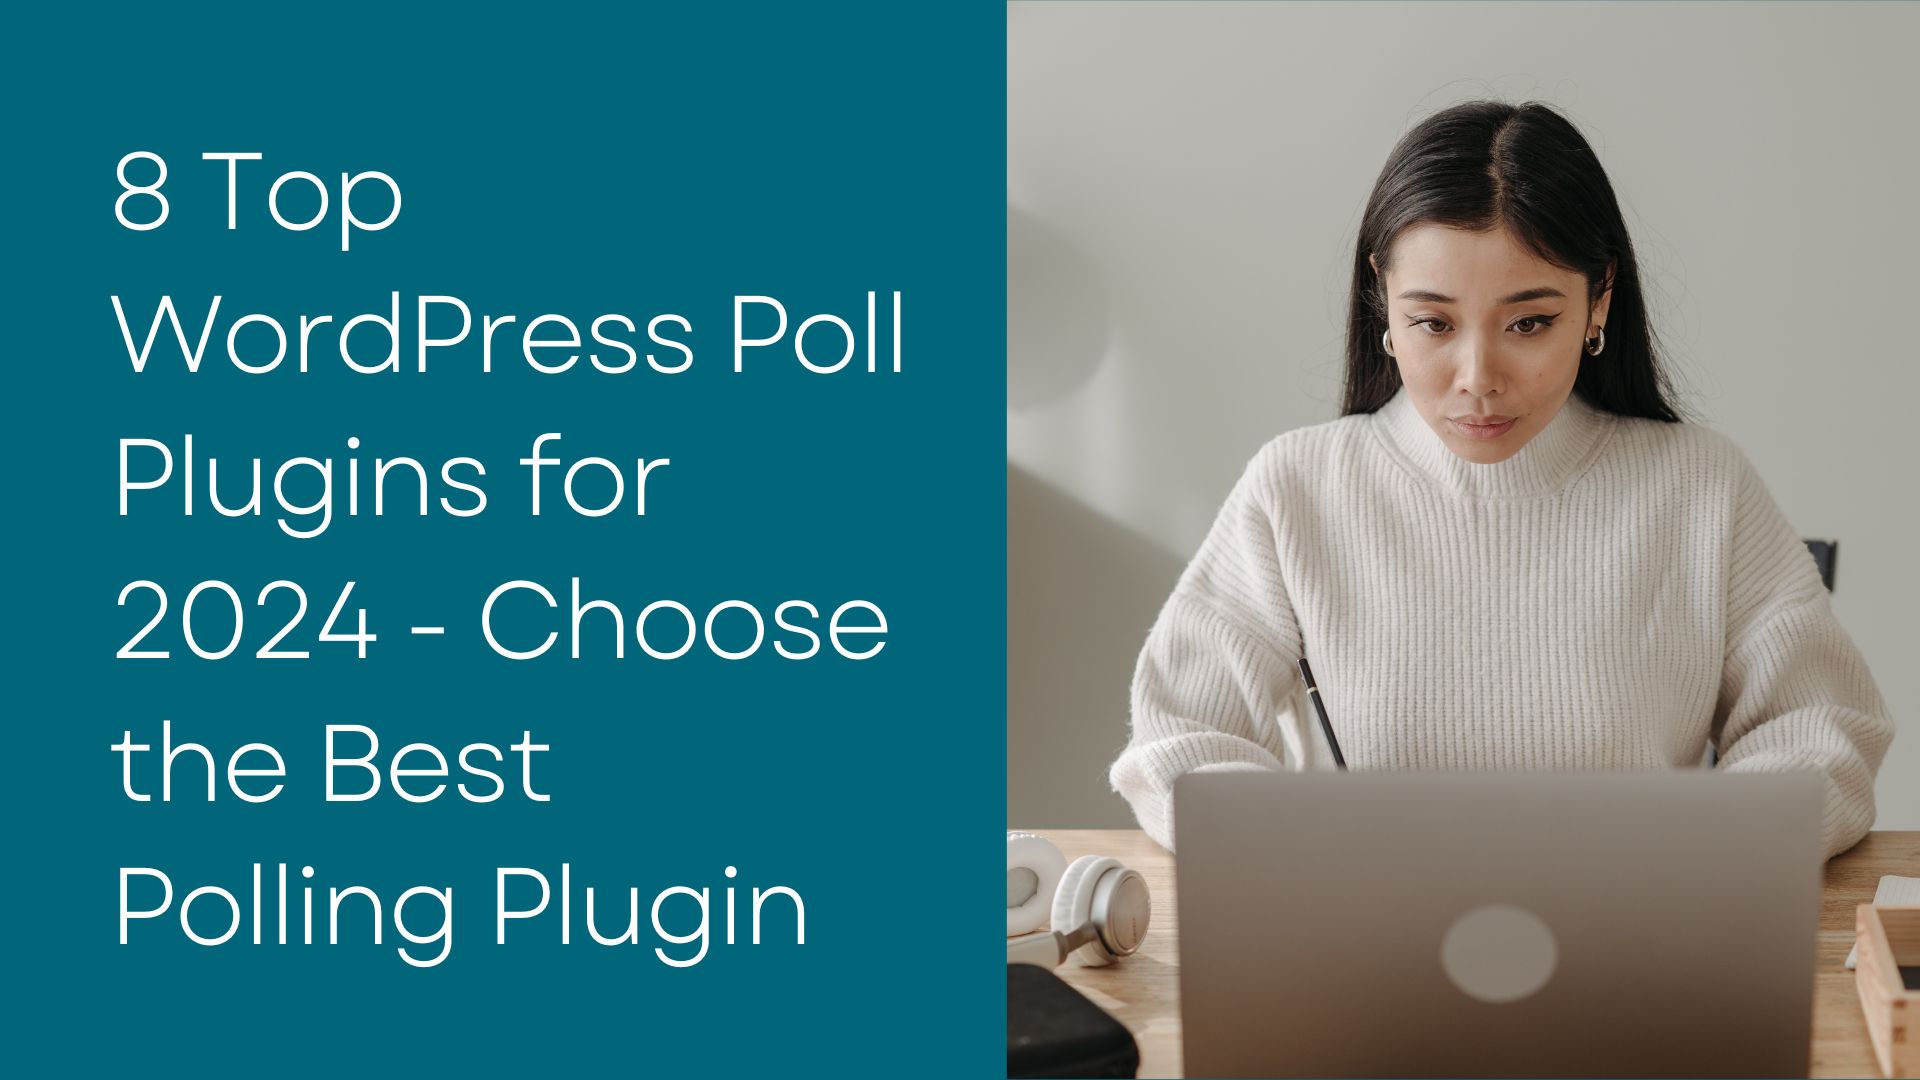 8 Top WordPress Poll Plugins for 2024 - Choose the Best Polling Plugin